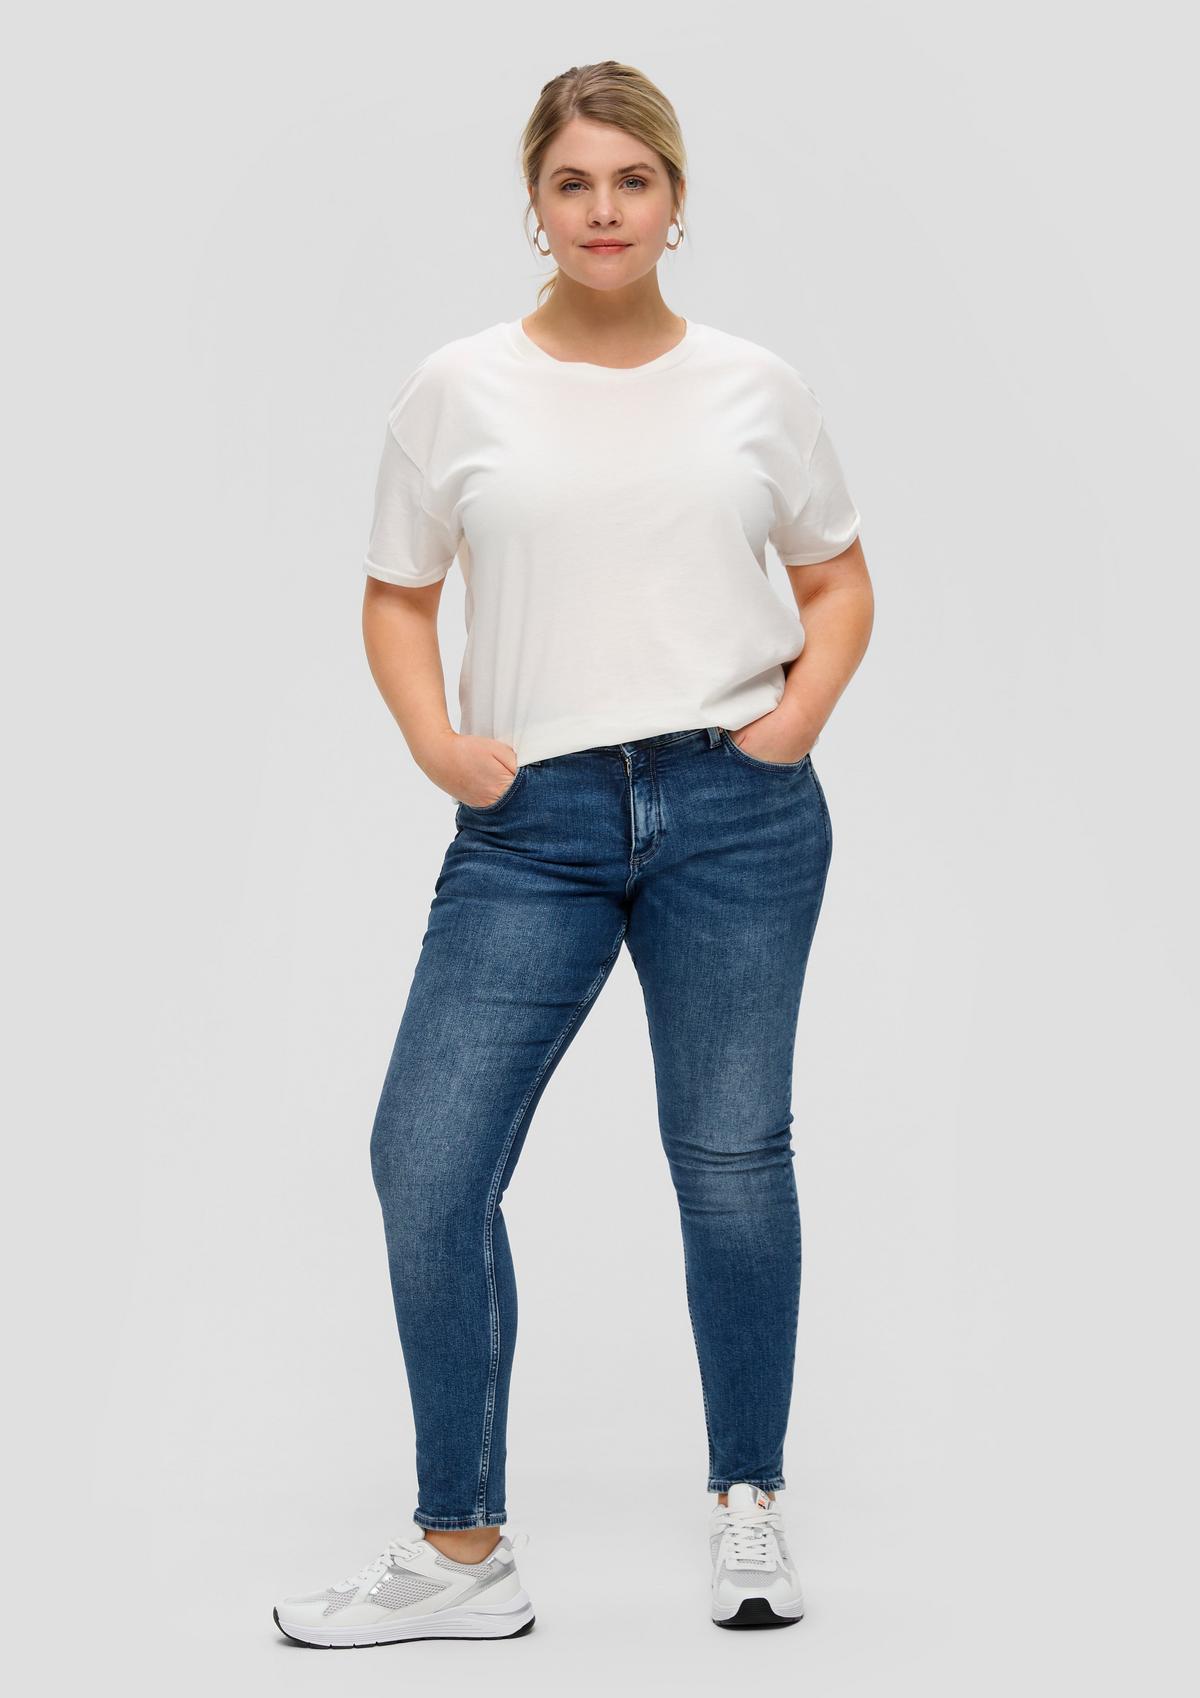 Jeans hlače/kroj Mid Rise/ozke hlačnice